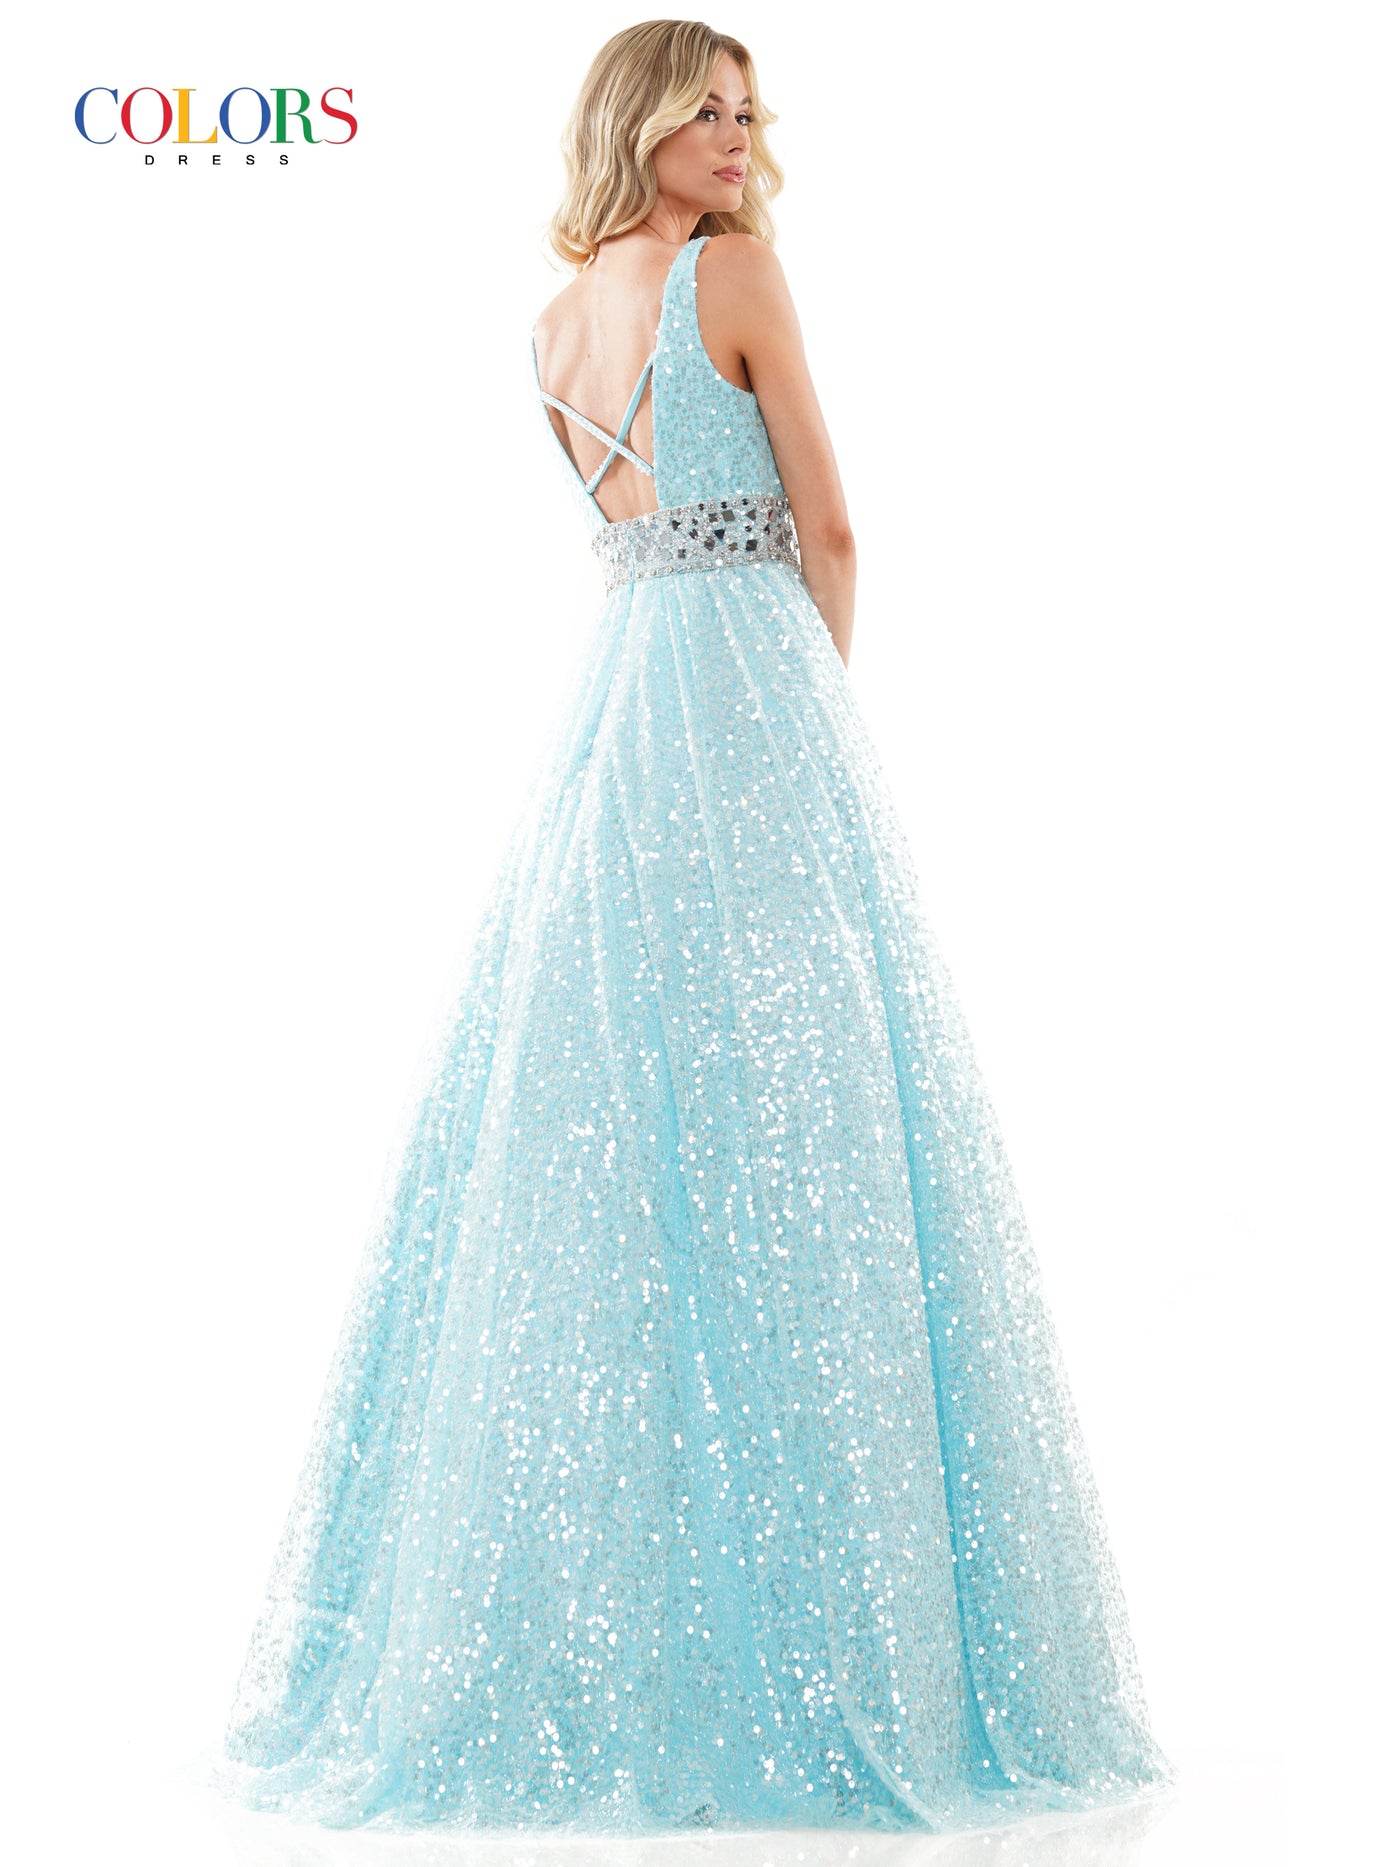 Colors Dress 2967 Light Blue Prom Dress